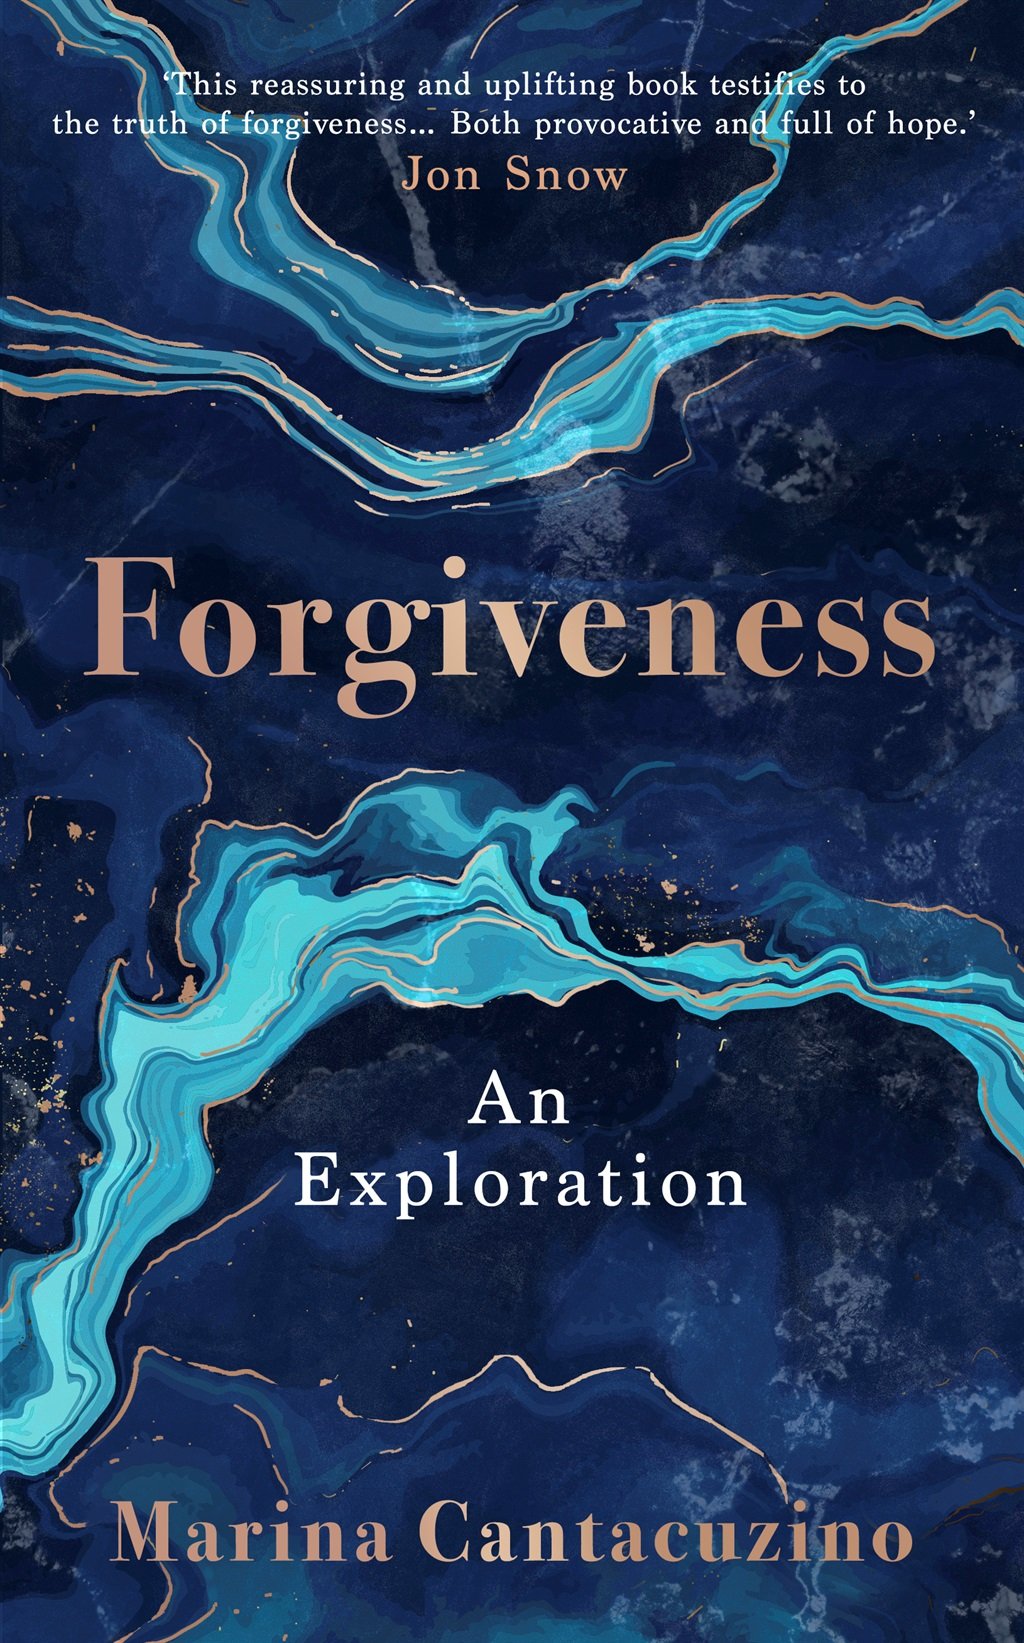 Forgiveness: An Exploration by Marina Cantacuzino. (Simon & Schuster)